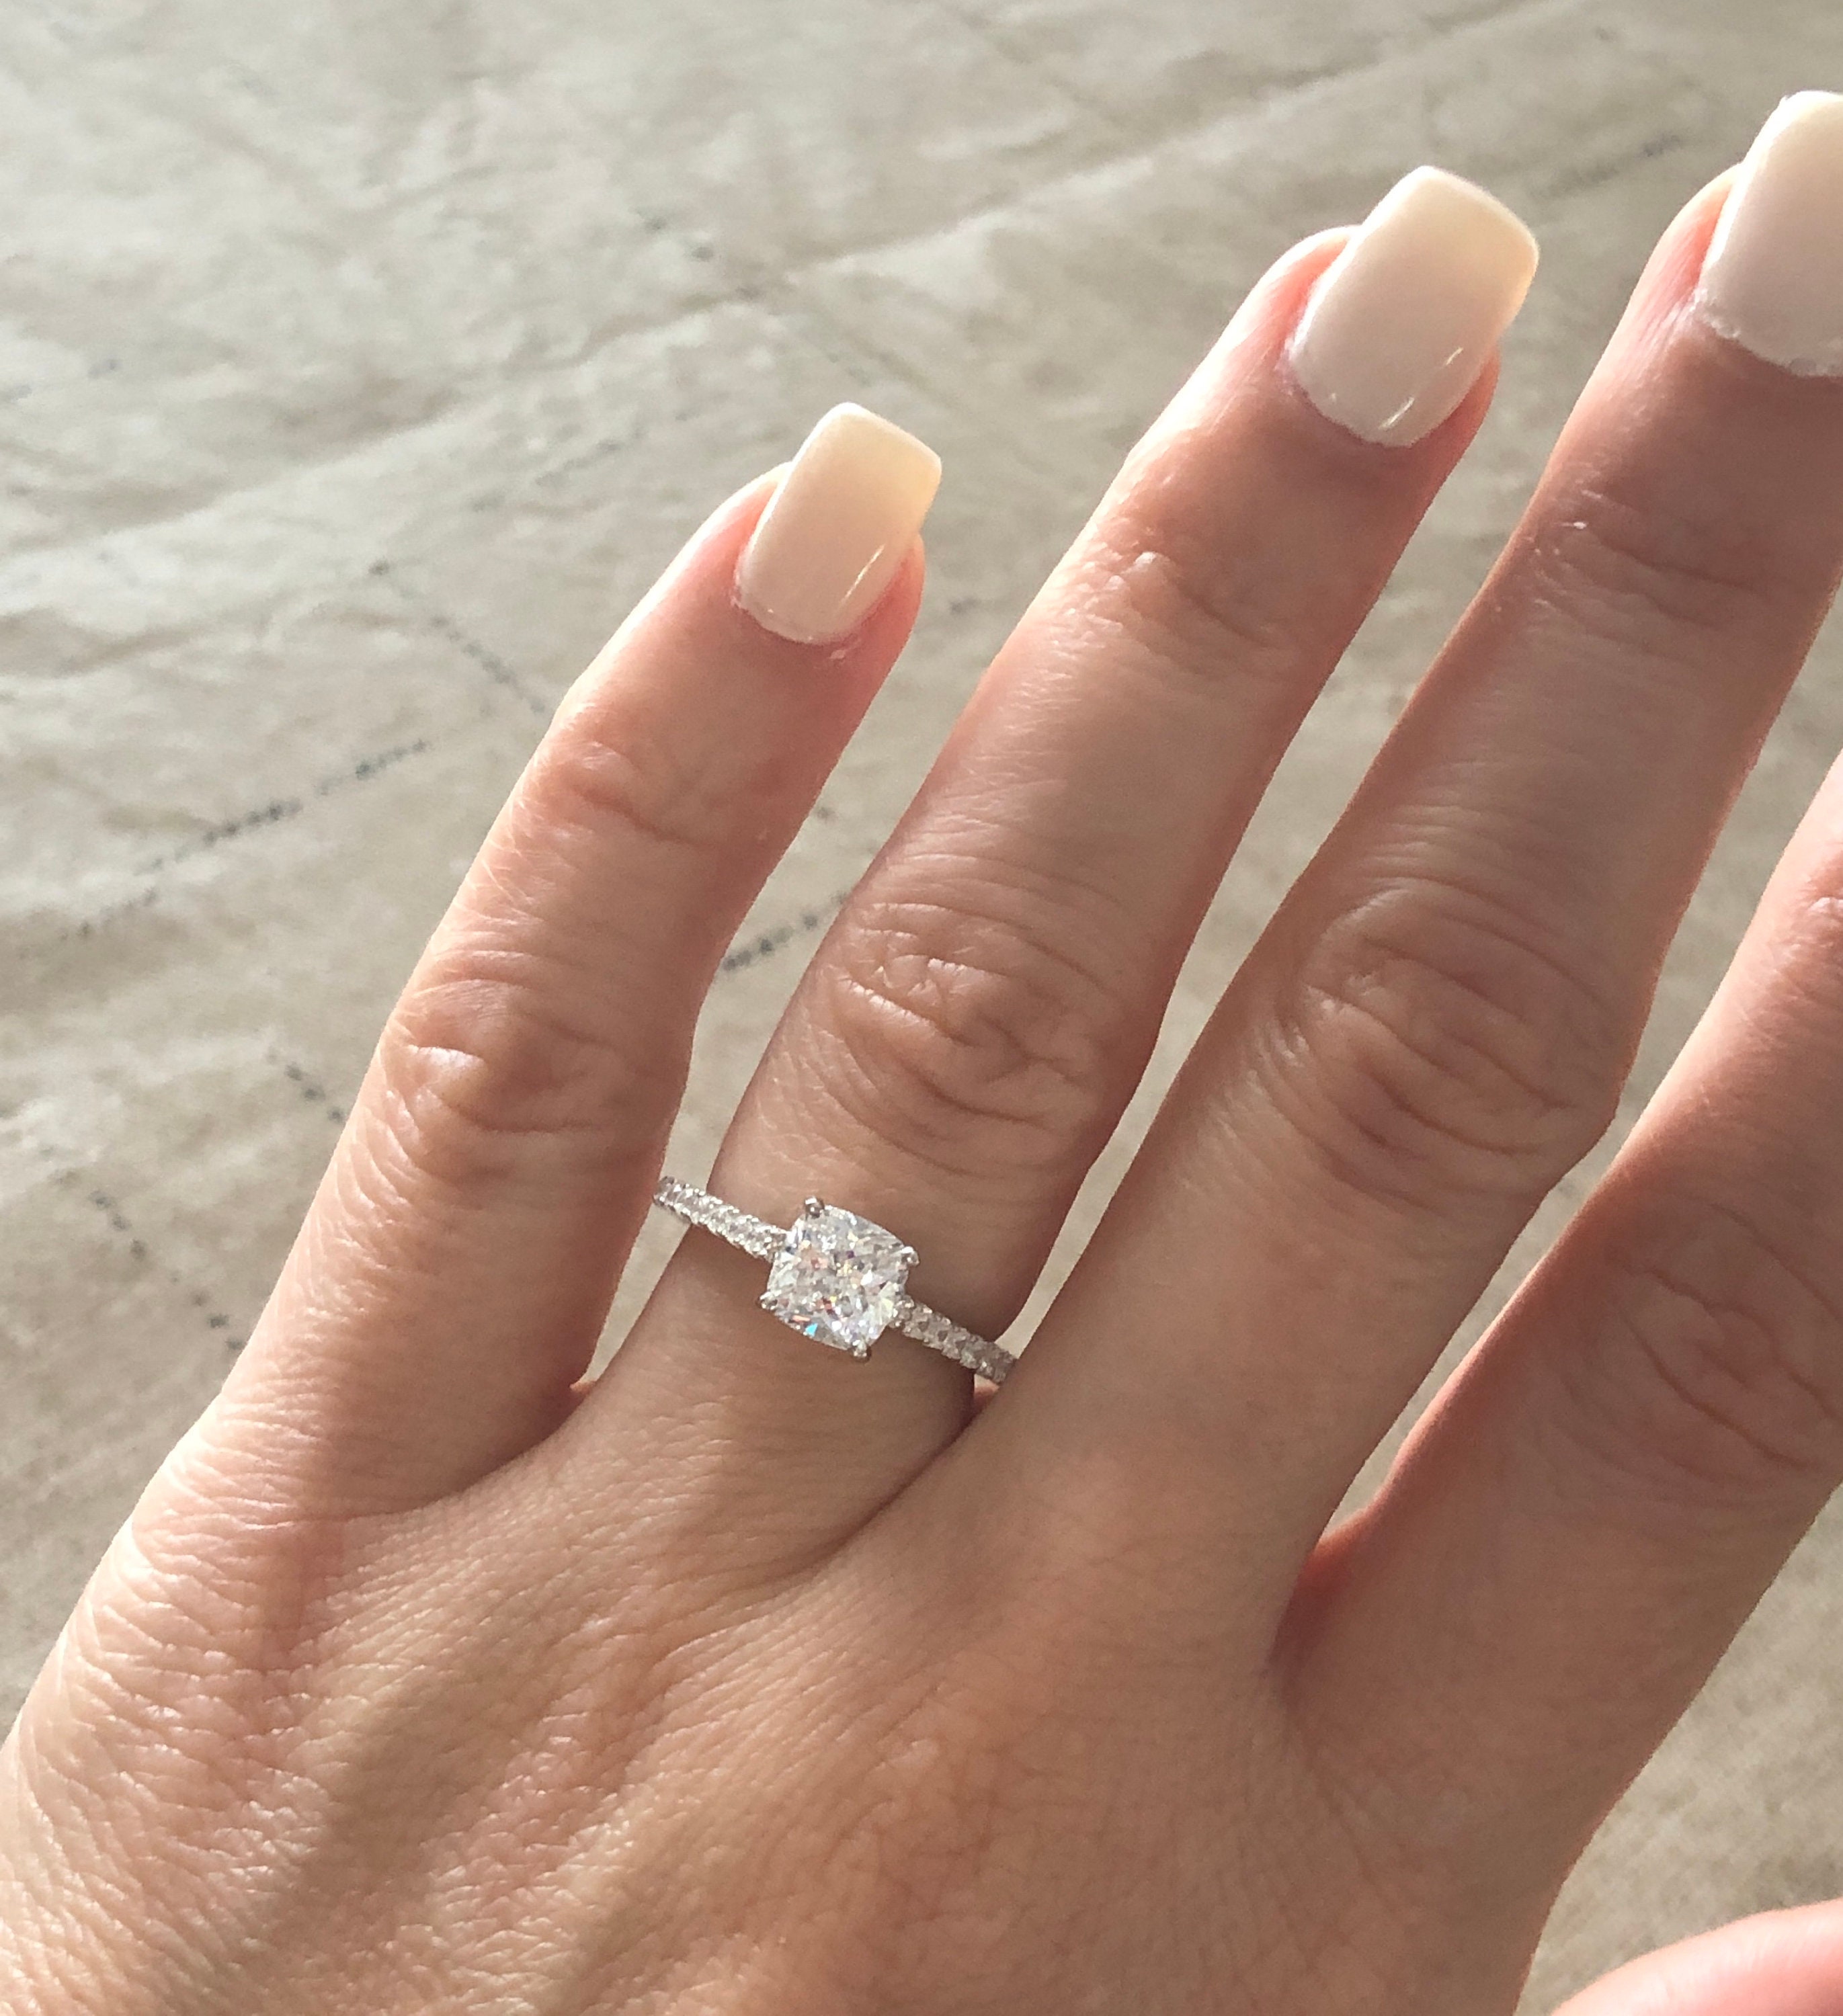 1 Carat Cushion Cut Engagement Ring. Beautiful High Quality Cz - Etsy